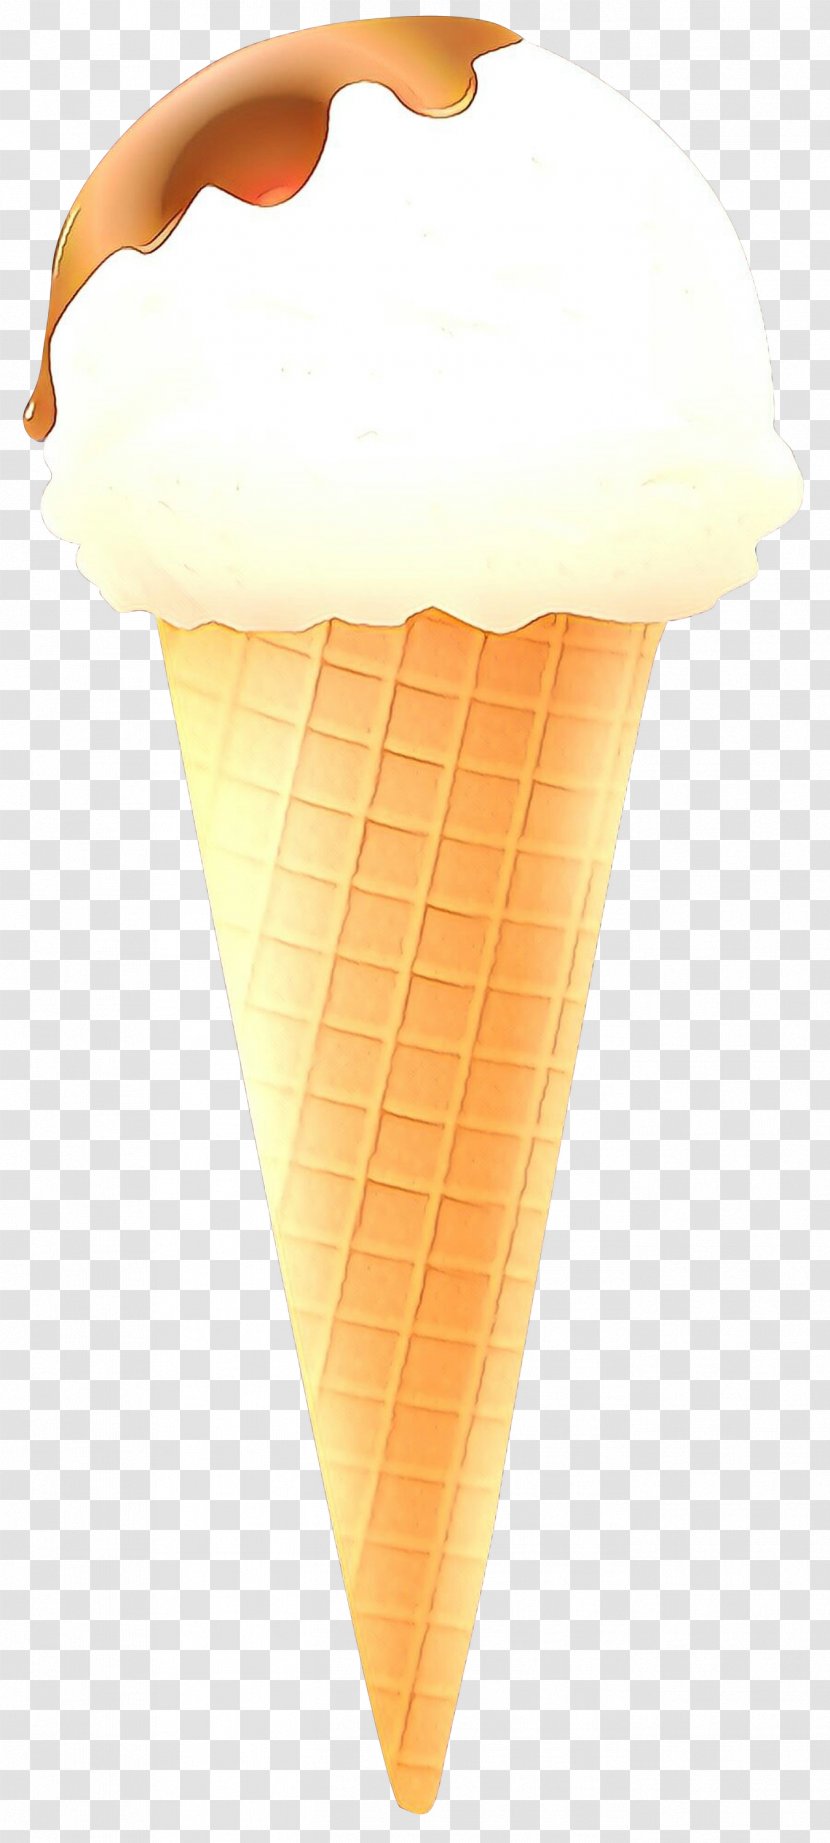 Ice Cream - Cone - Dondurma Transparent PNG